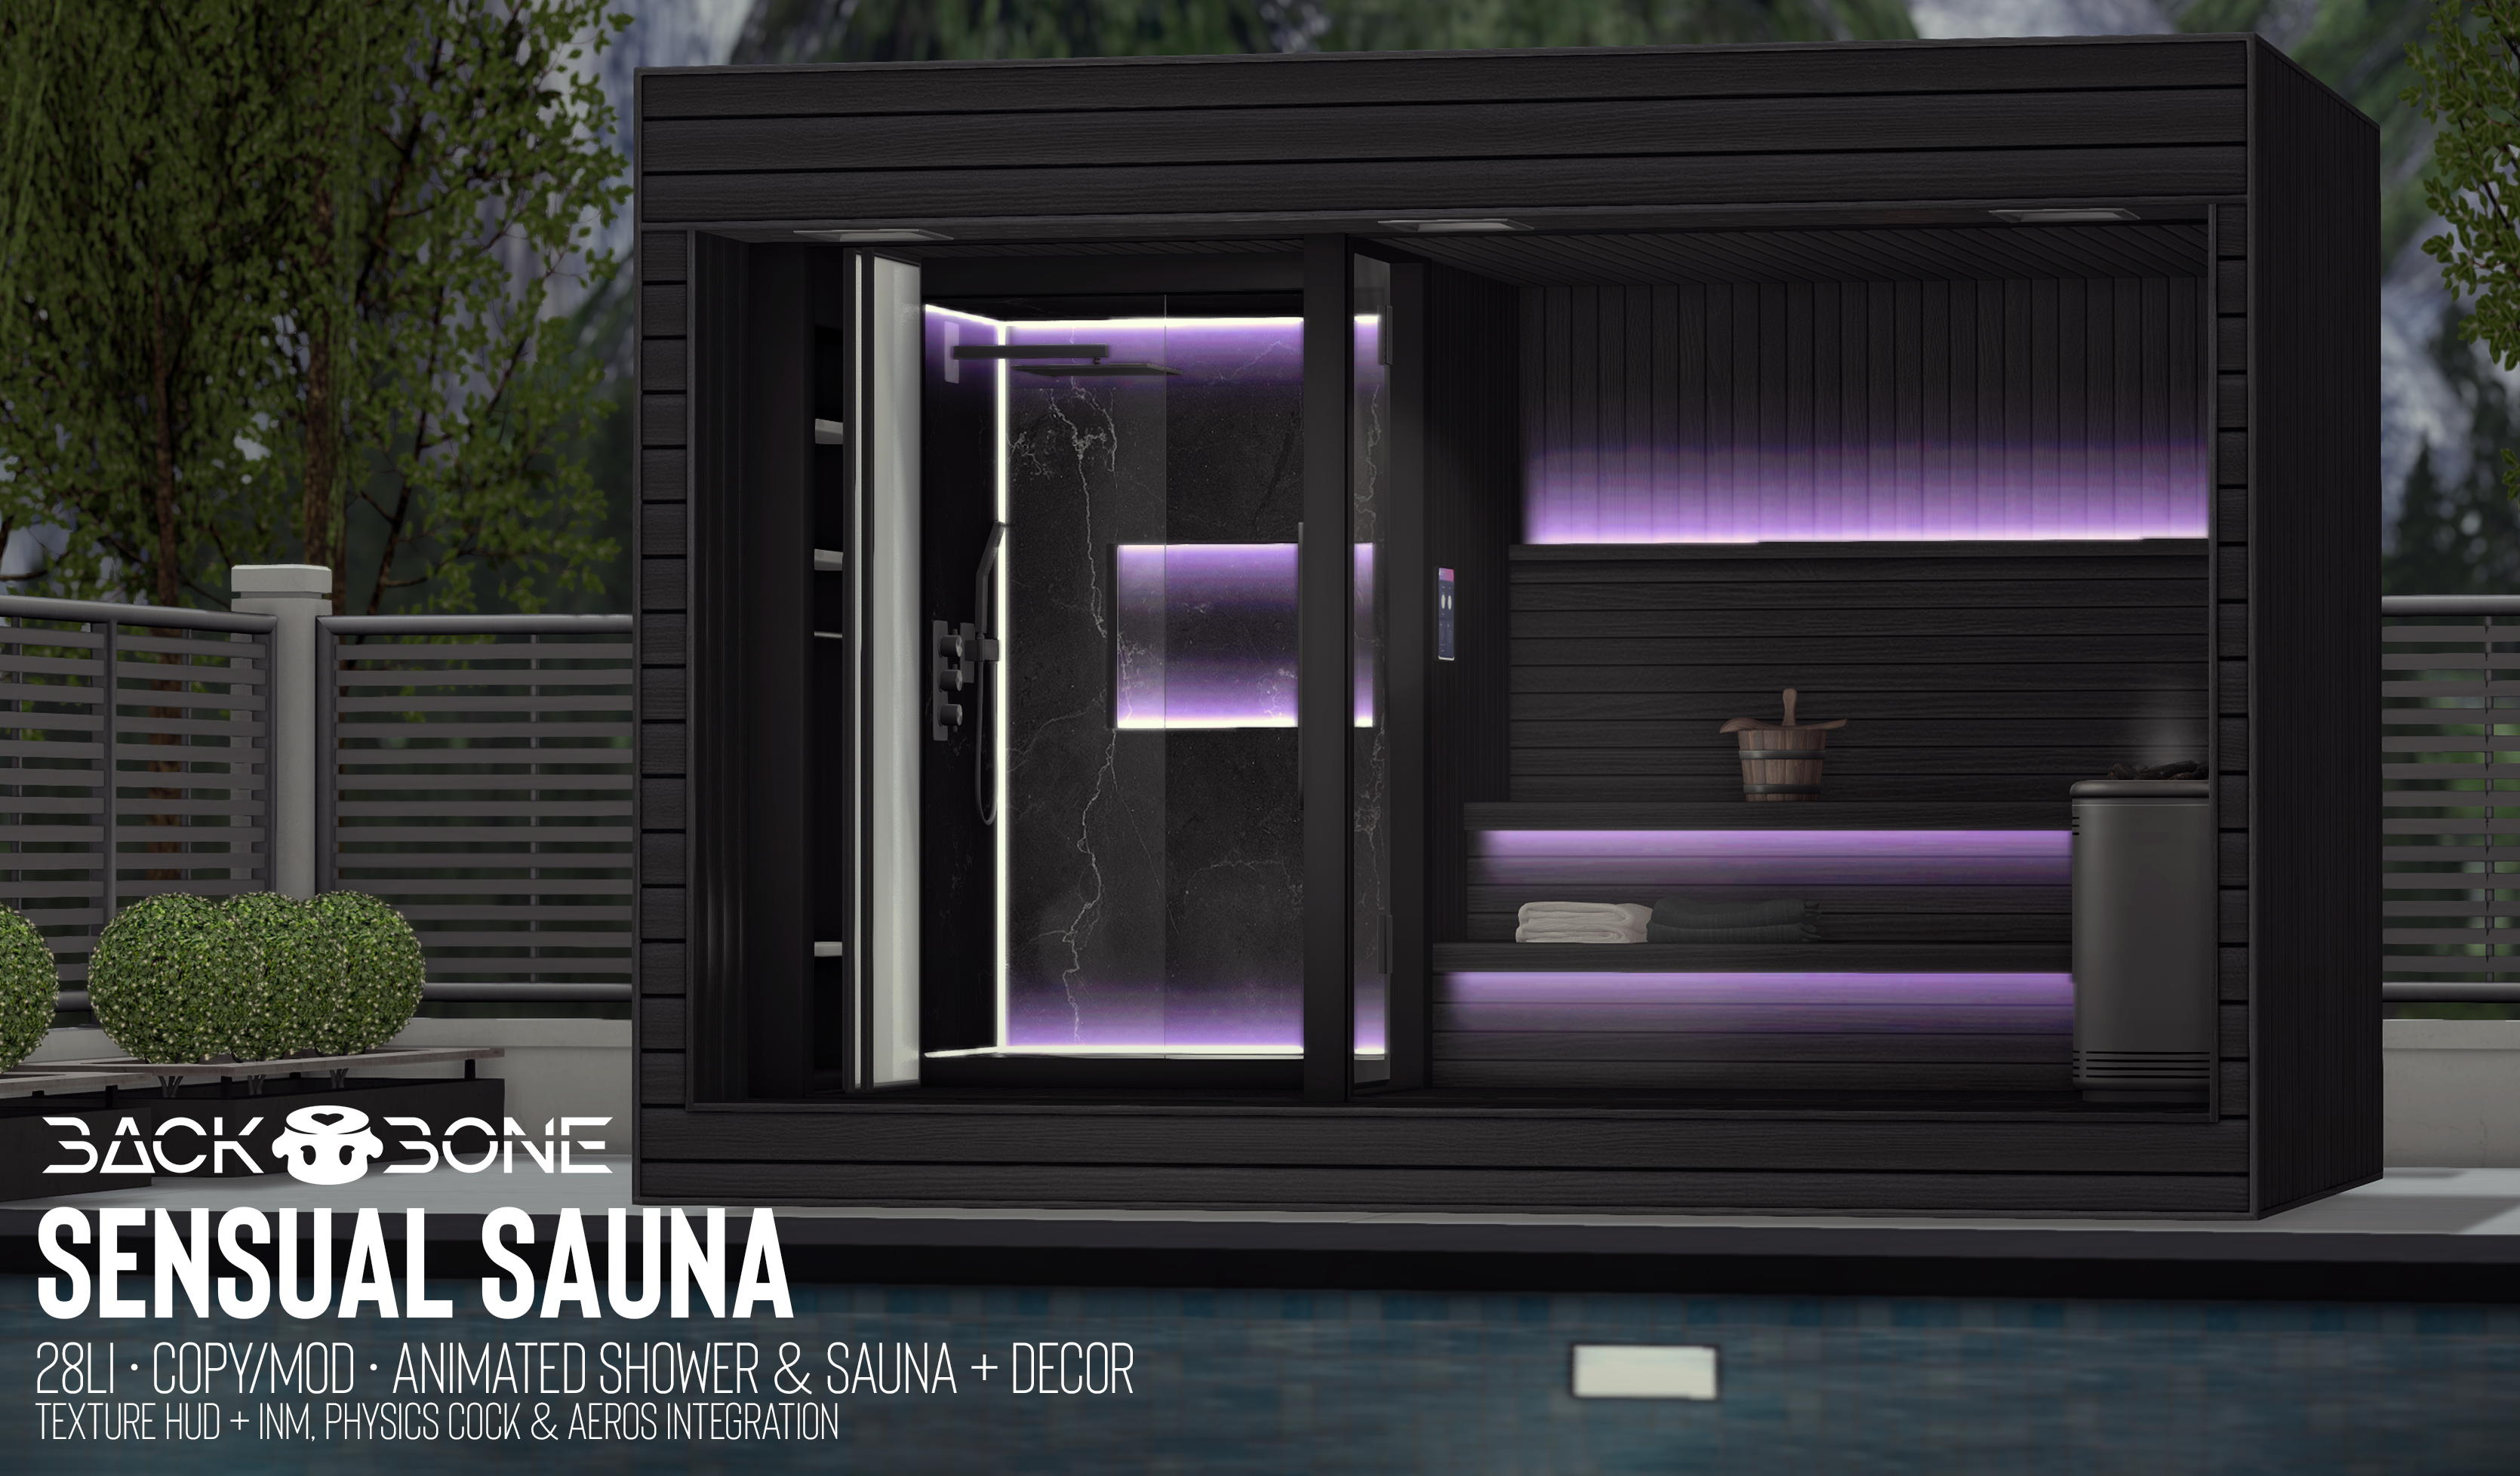 Backbone – Sensual Sauna